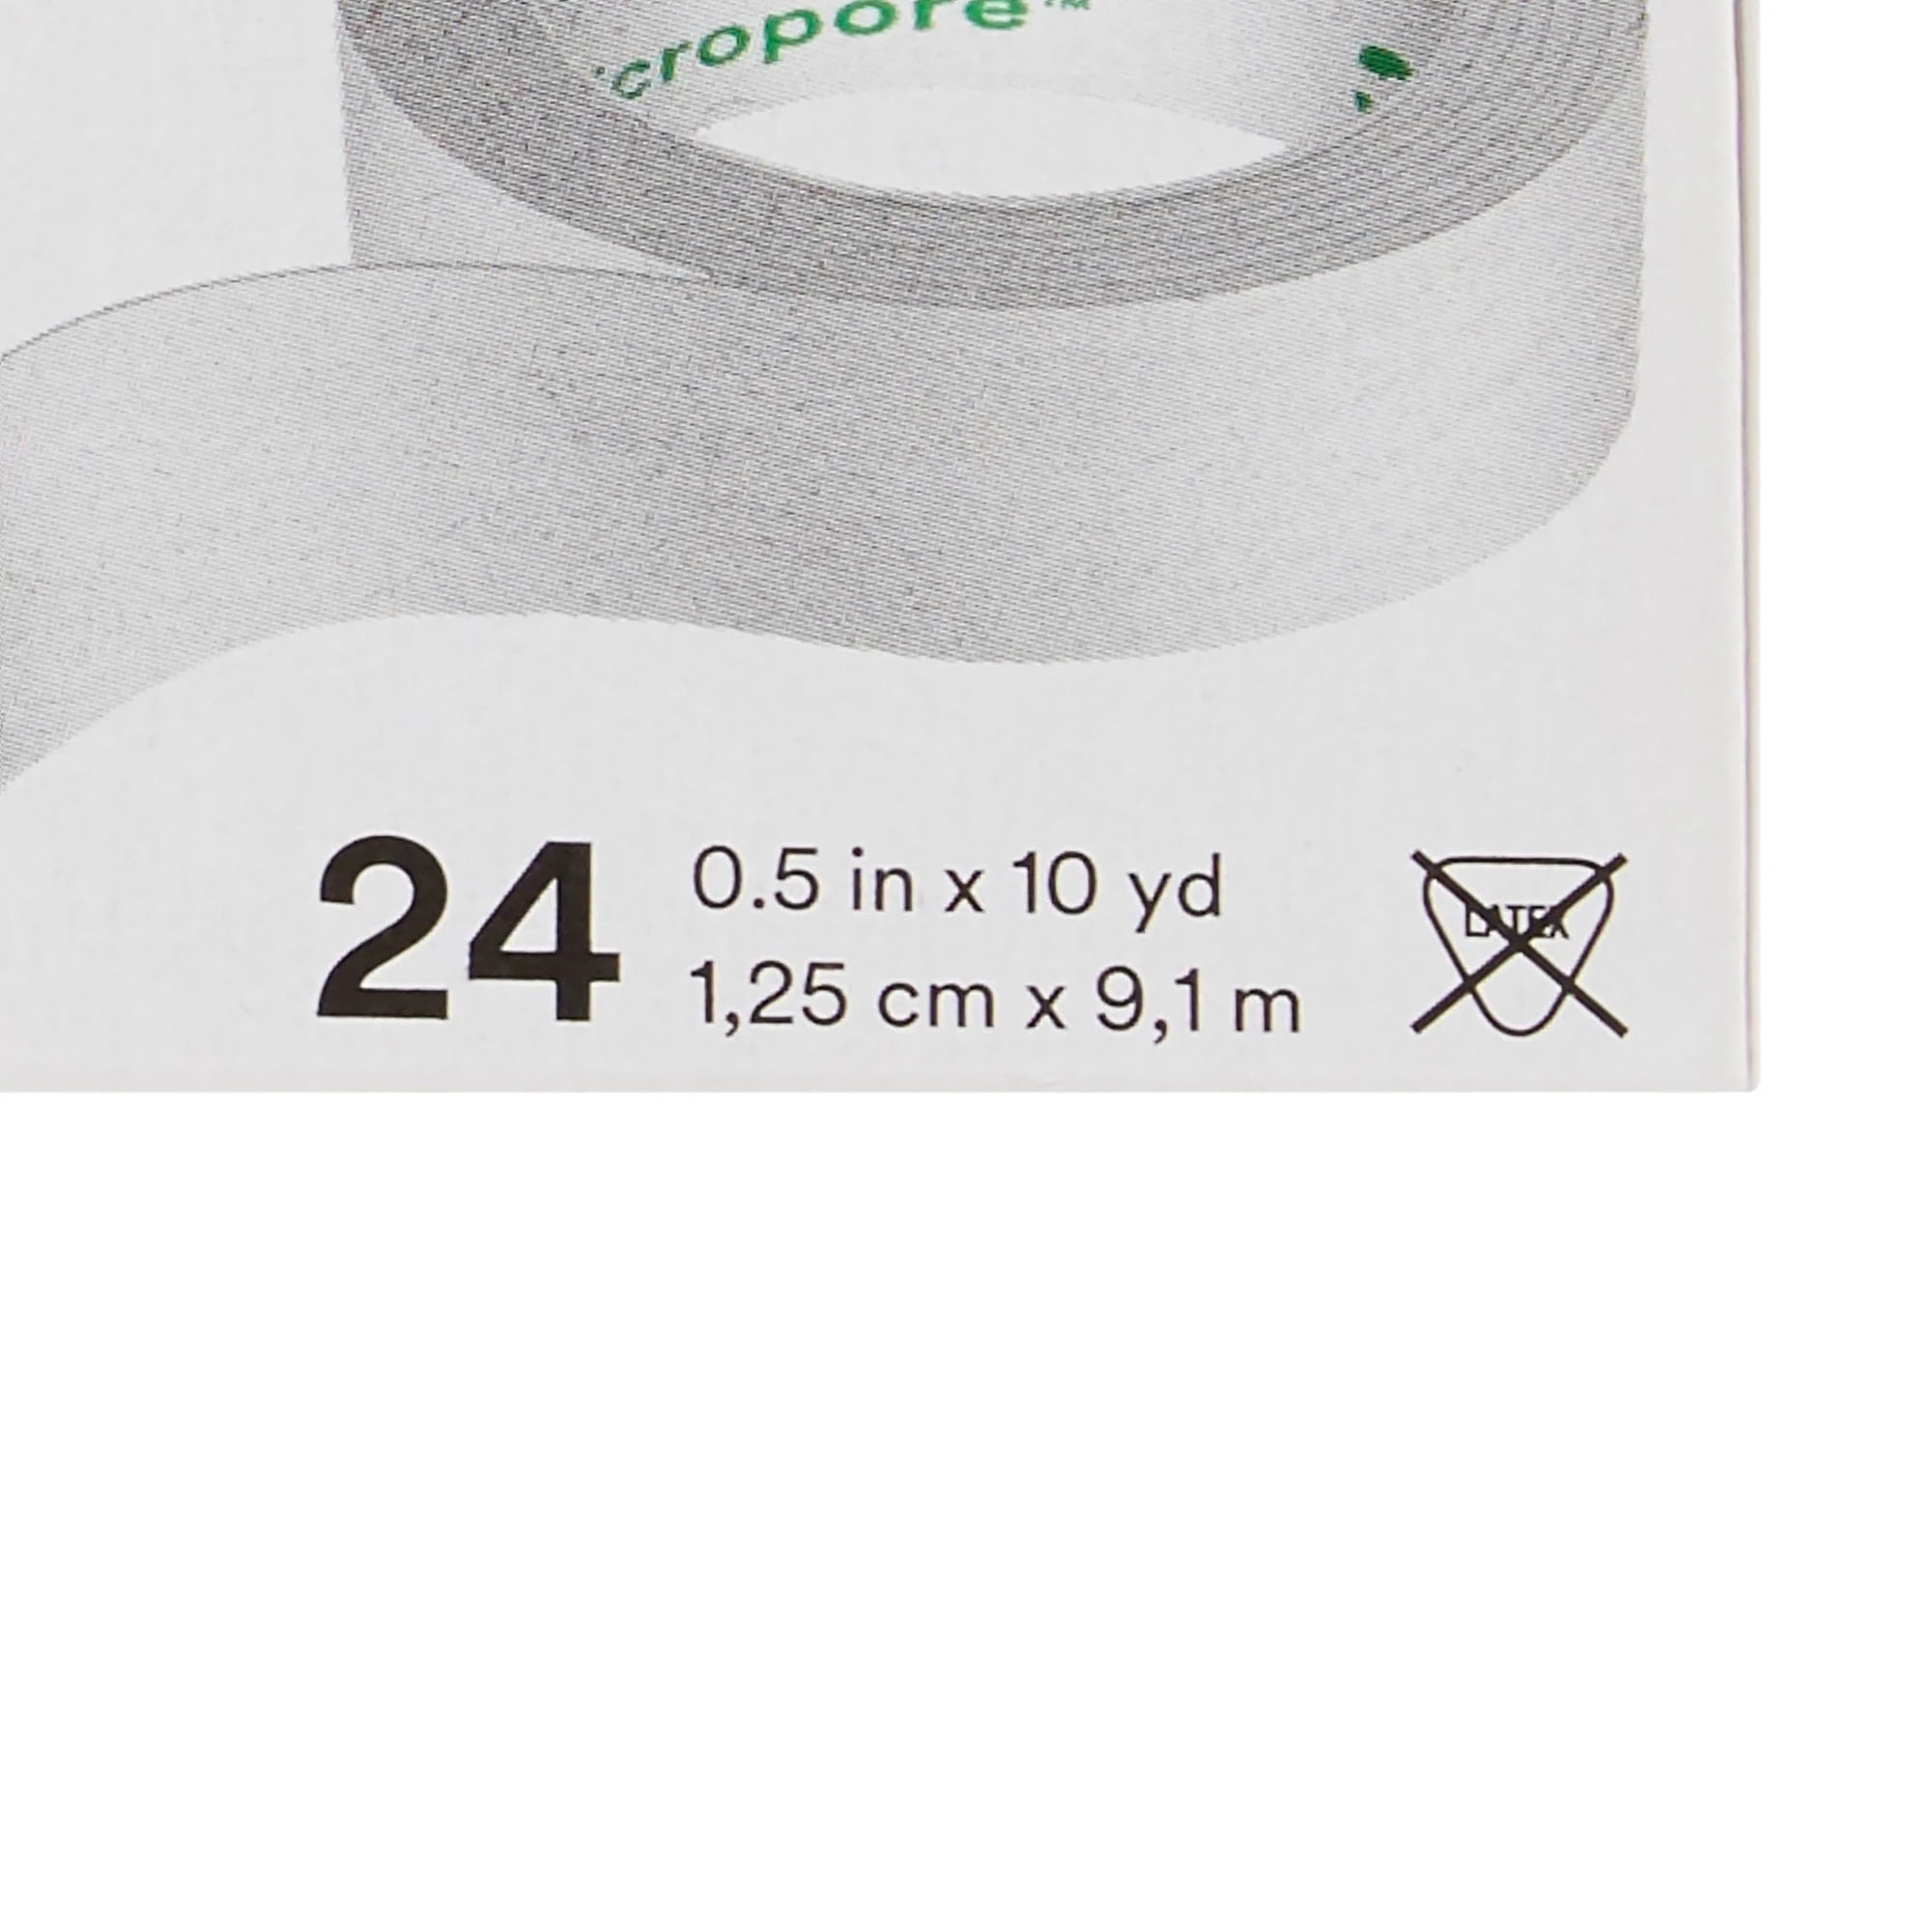 3M™ Micropore™ Surgical Tape 1530-1 - 2.5 cm x 9.1 m